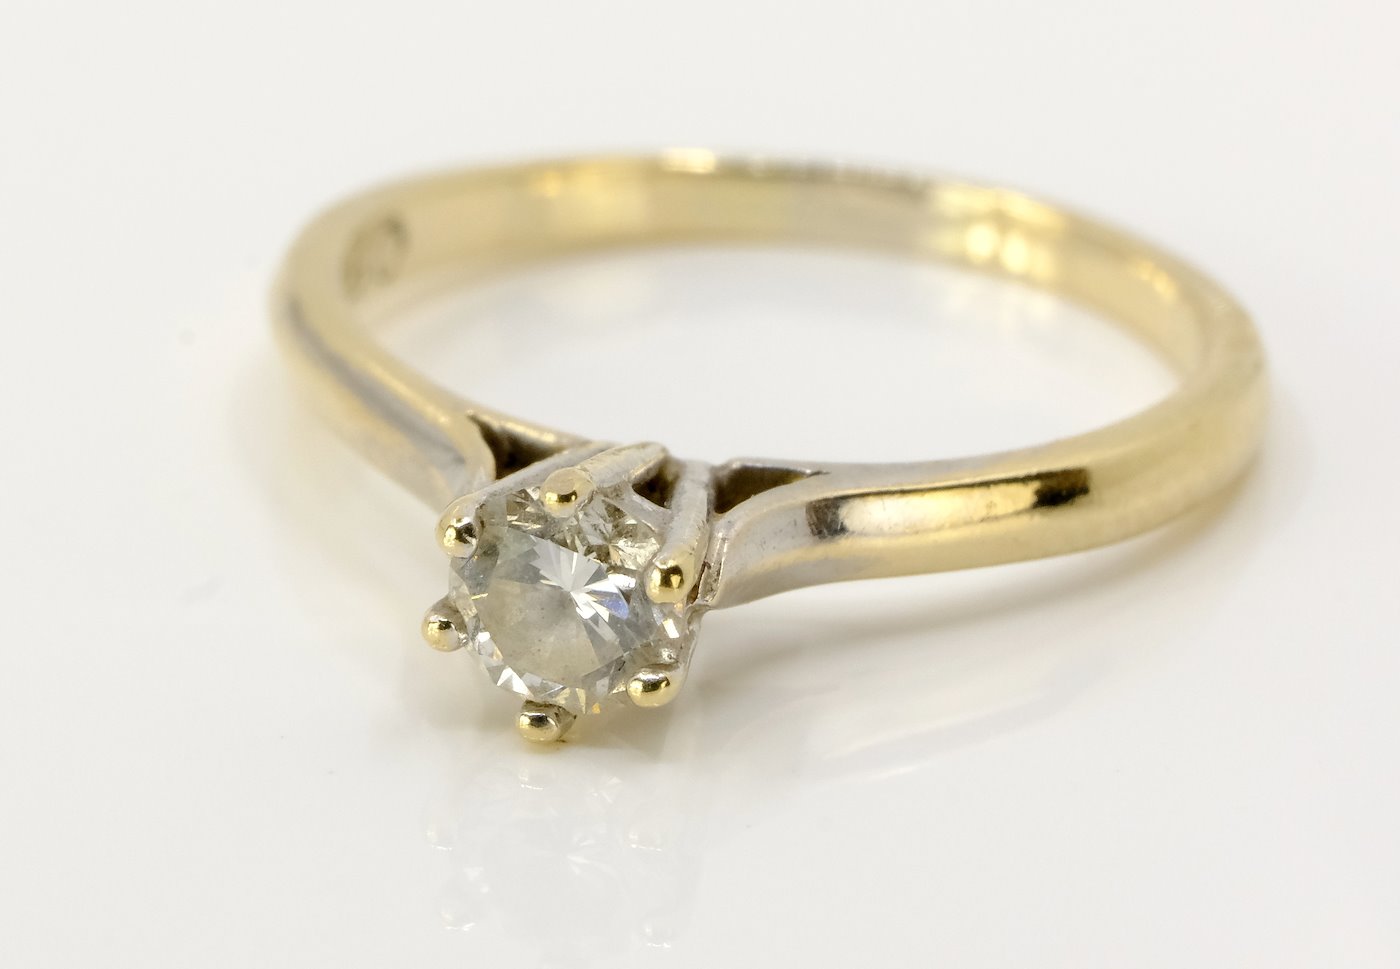 .. - Prsten s briliantem, zlato 750/1000, hrubá hmotnost 2,30 g